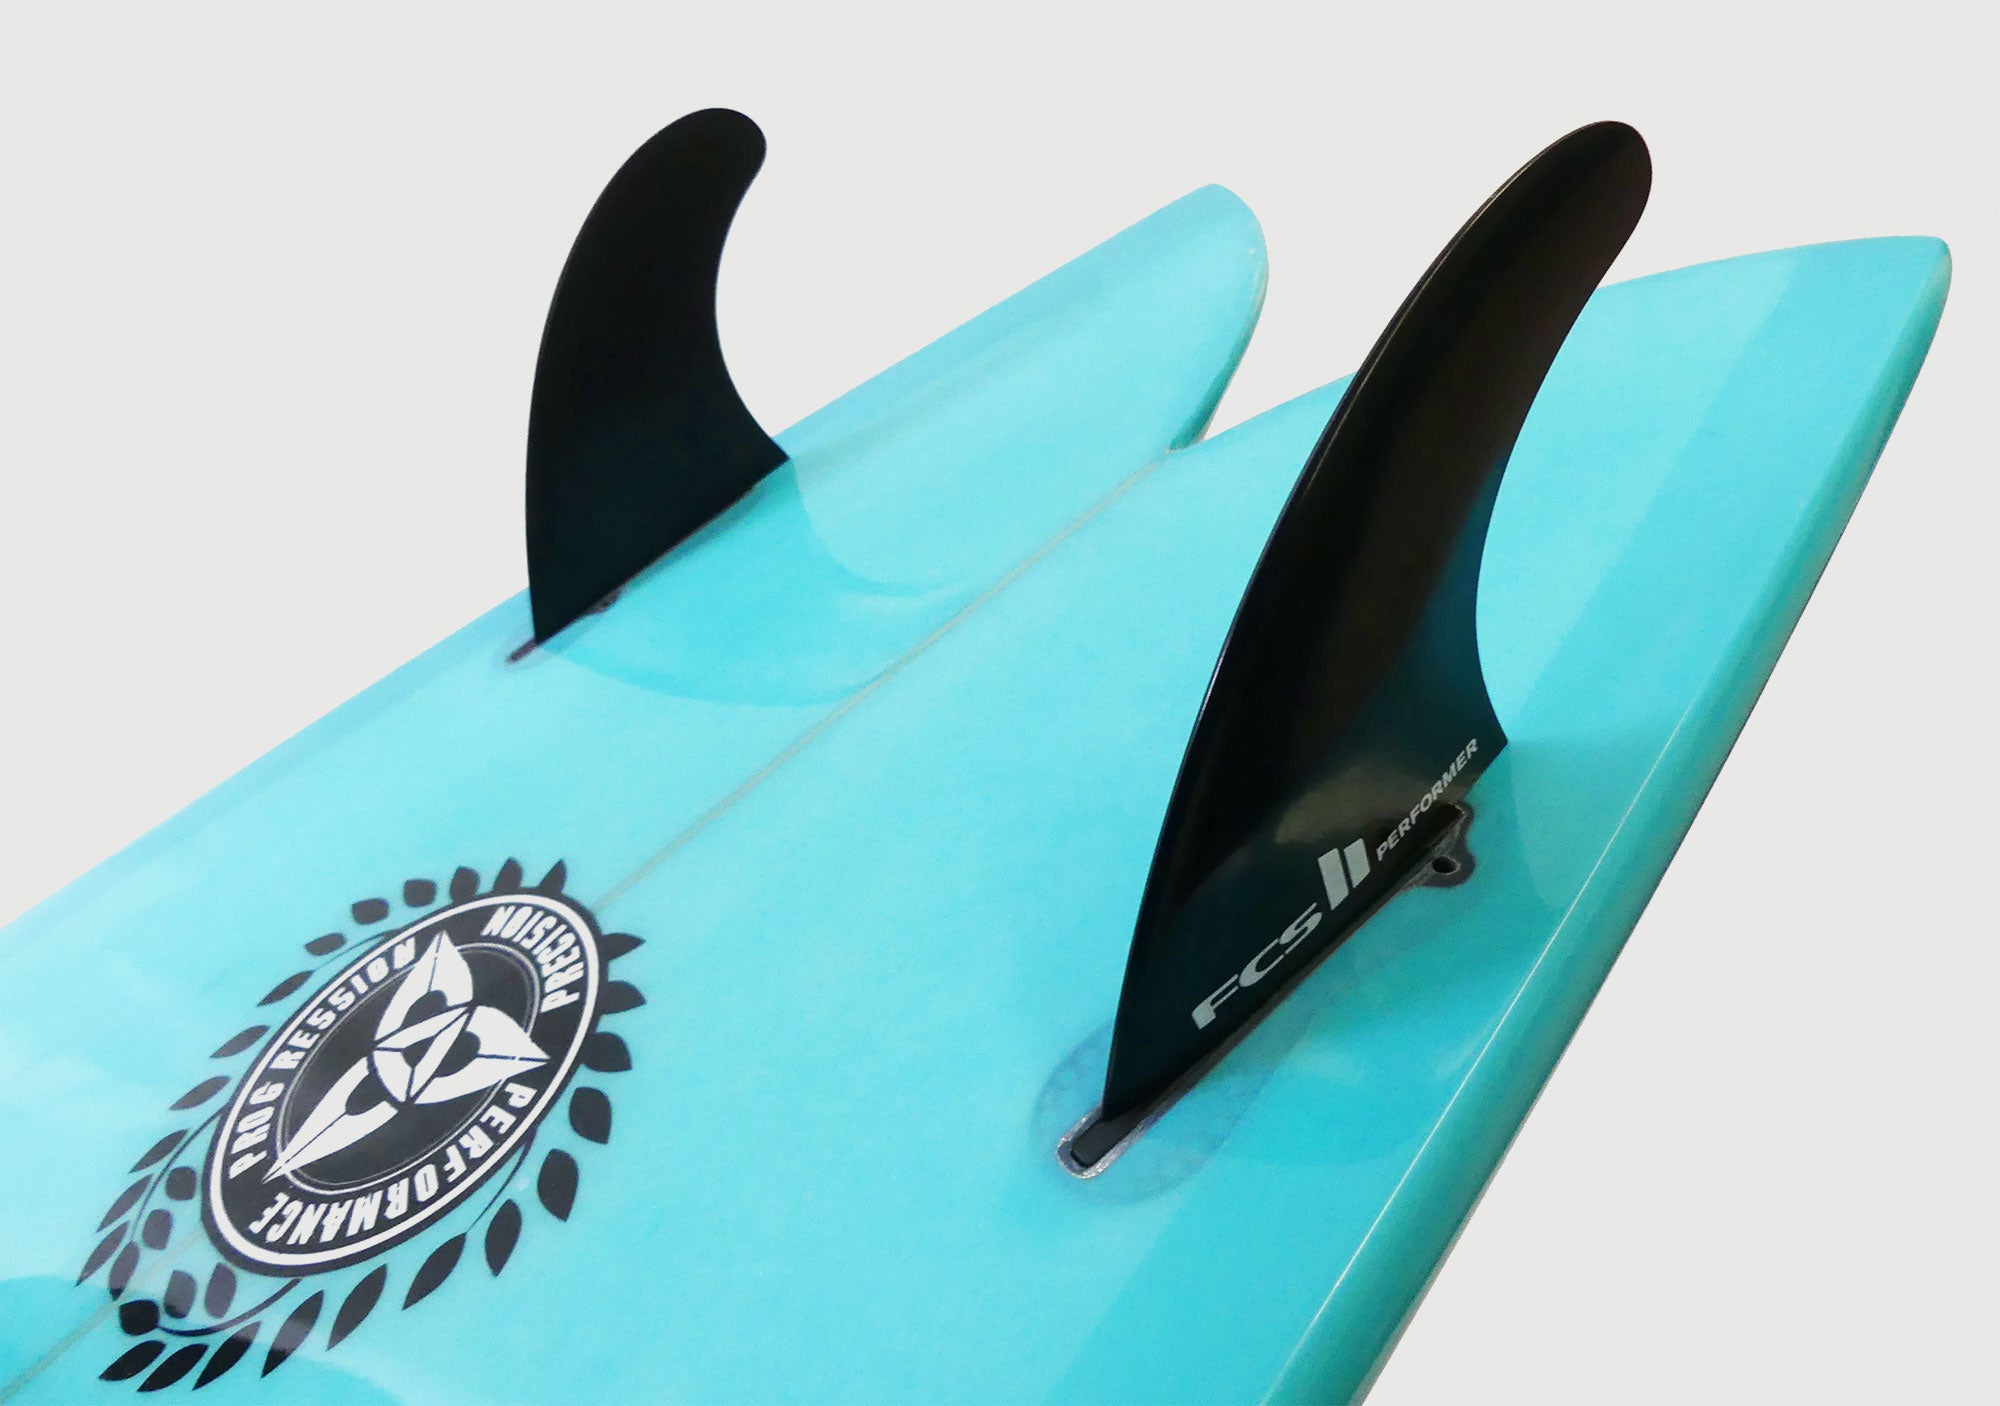 O'SHEA THRUSTER SURFBOARDS – O'SHEA ONLINE STORE